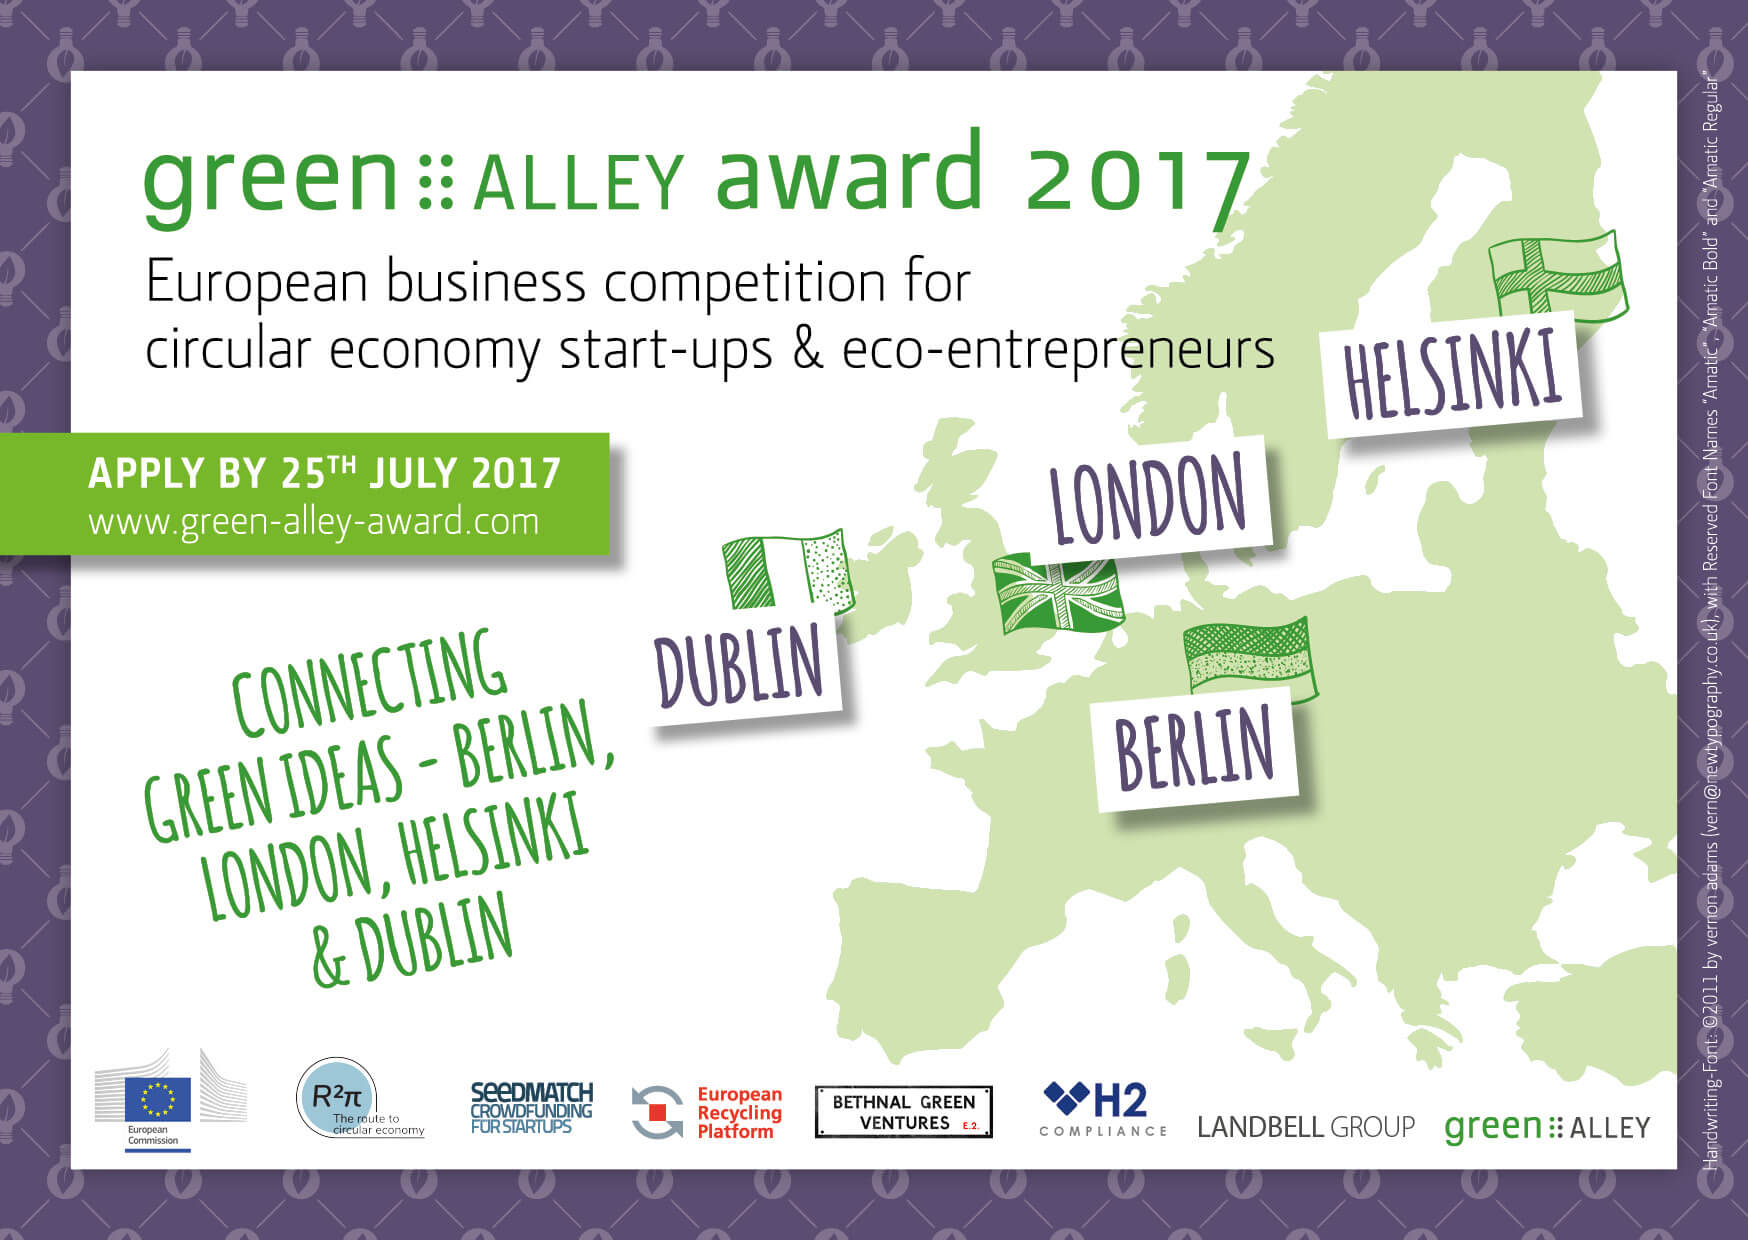 img-erp-blog-green-alley-award-2017